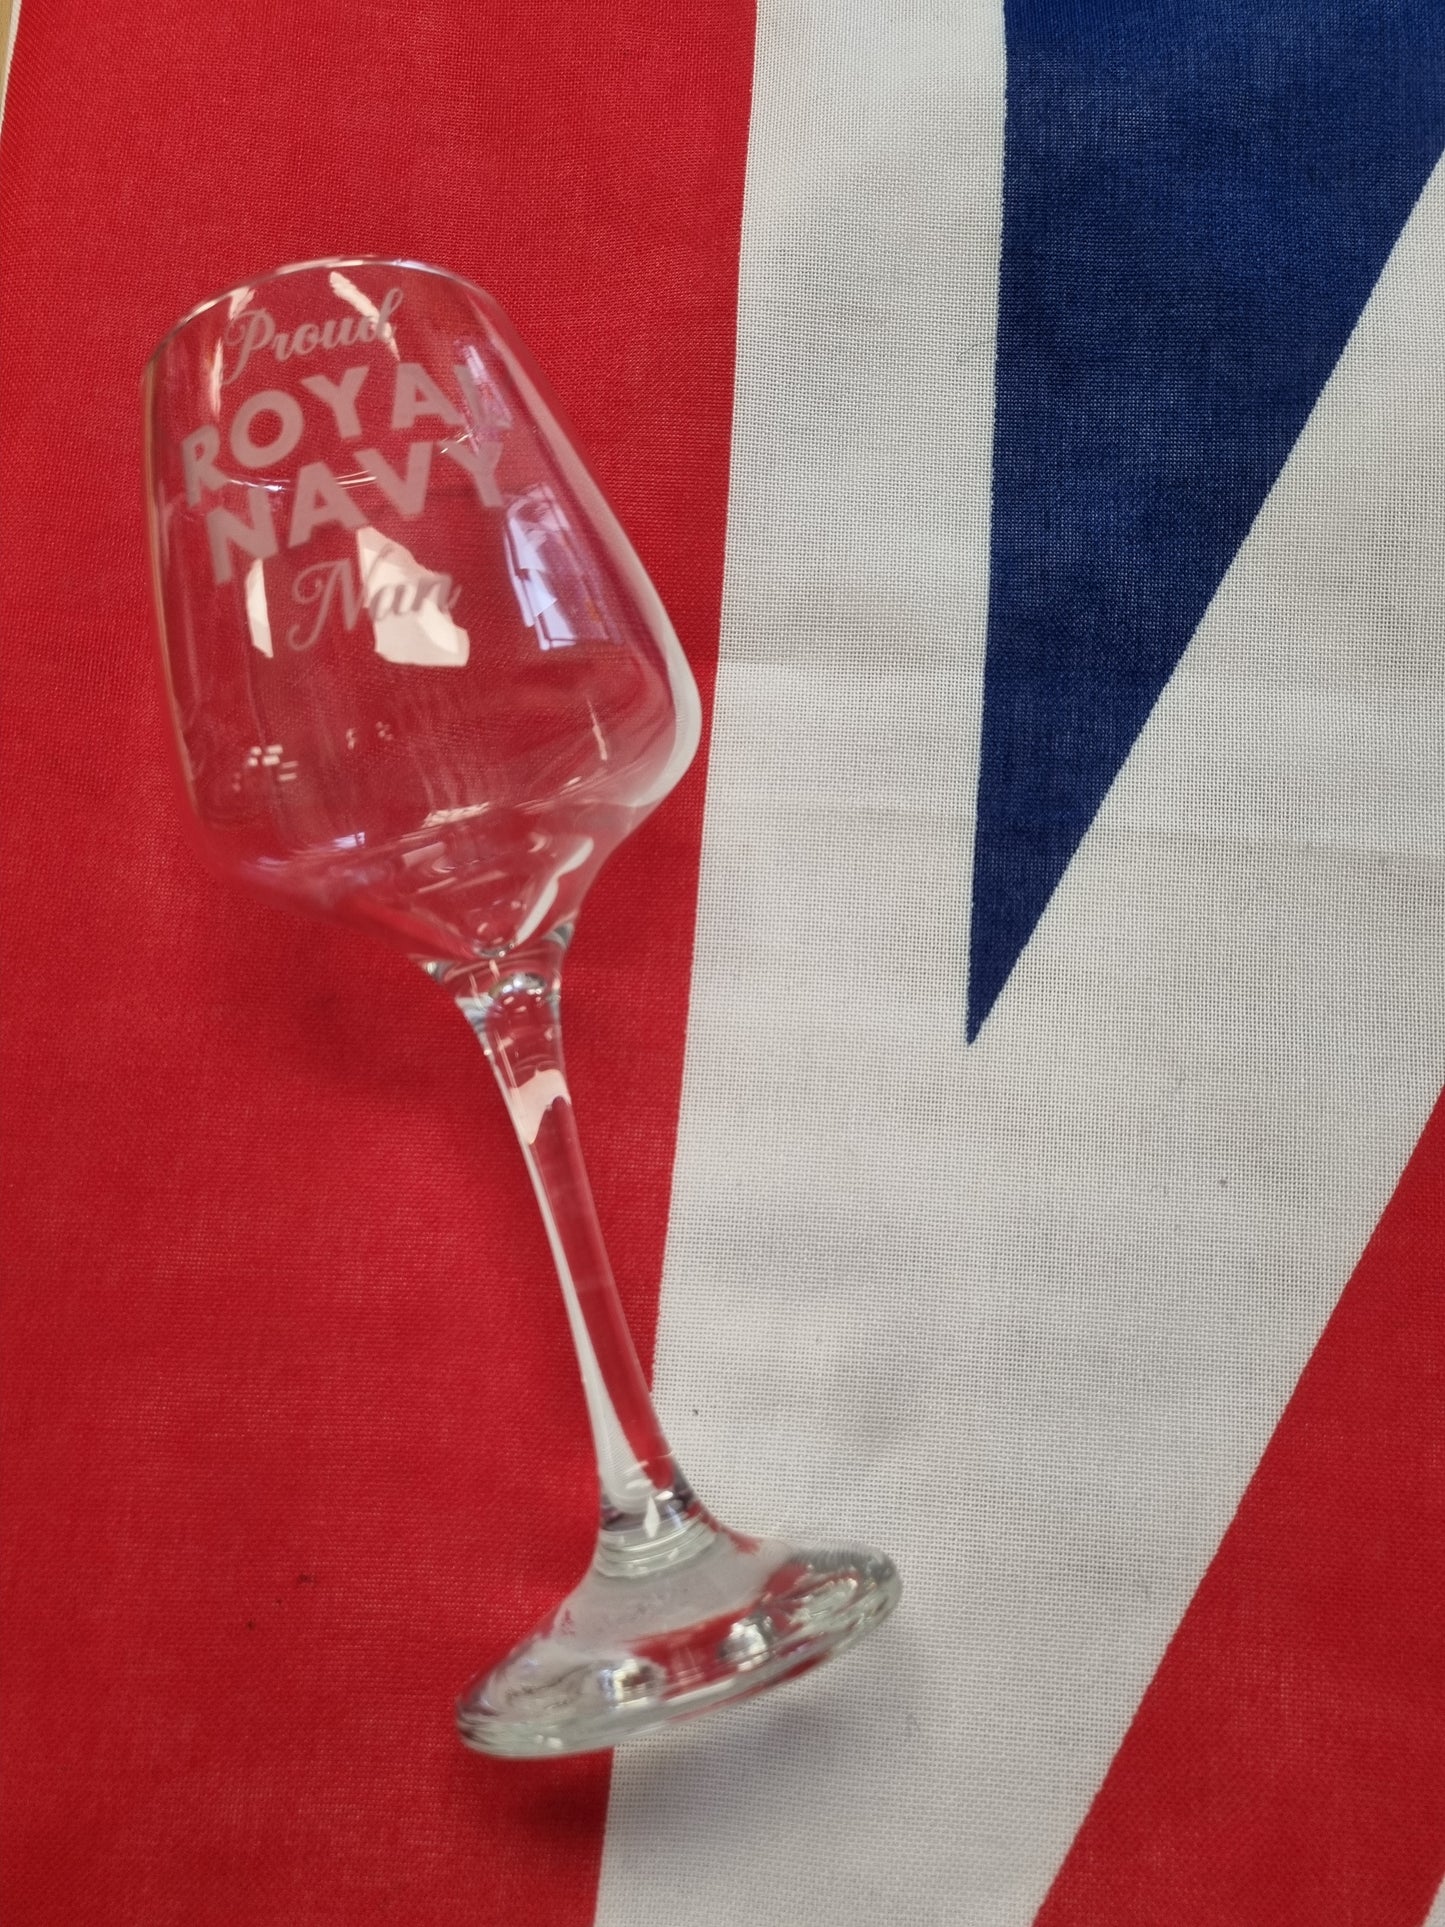 Proud Royal Navy Wine Glass